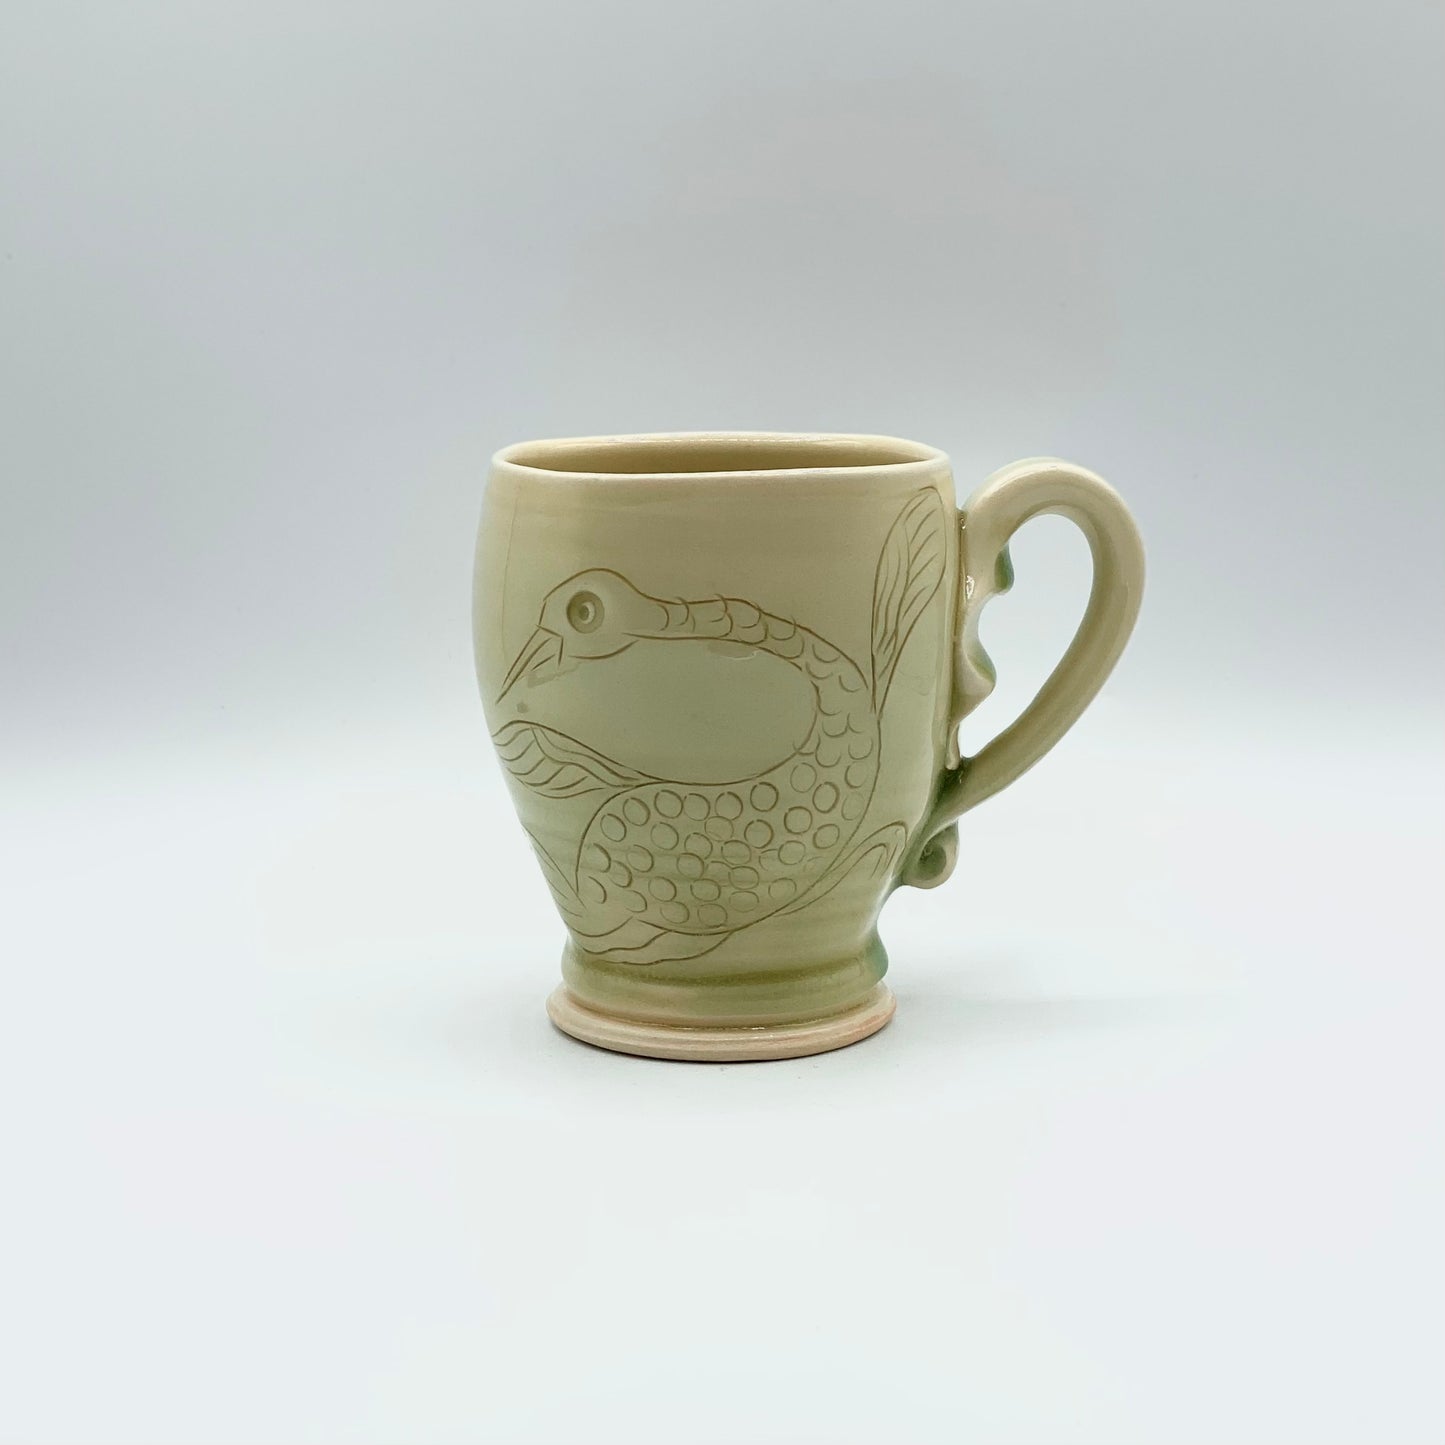 Mug by Peter Thomas Pottery